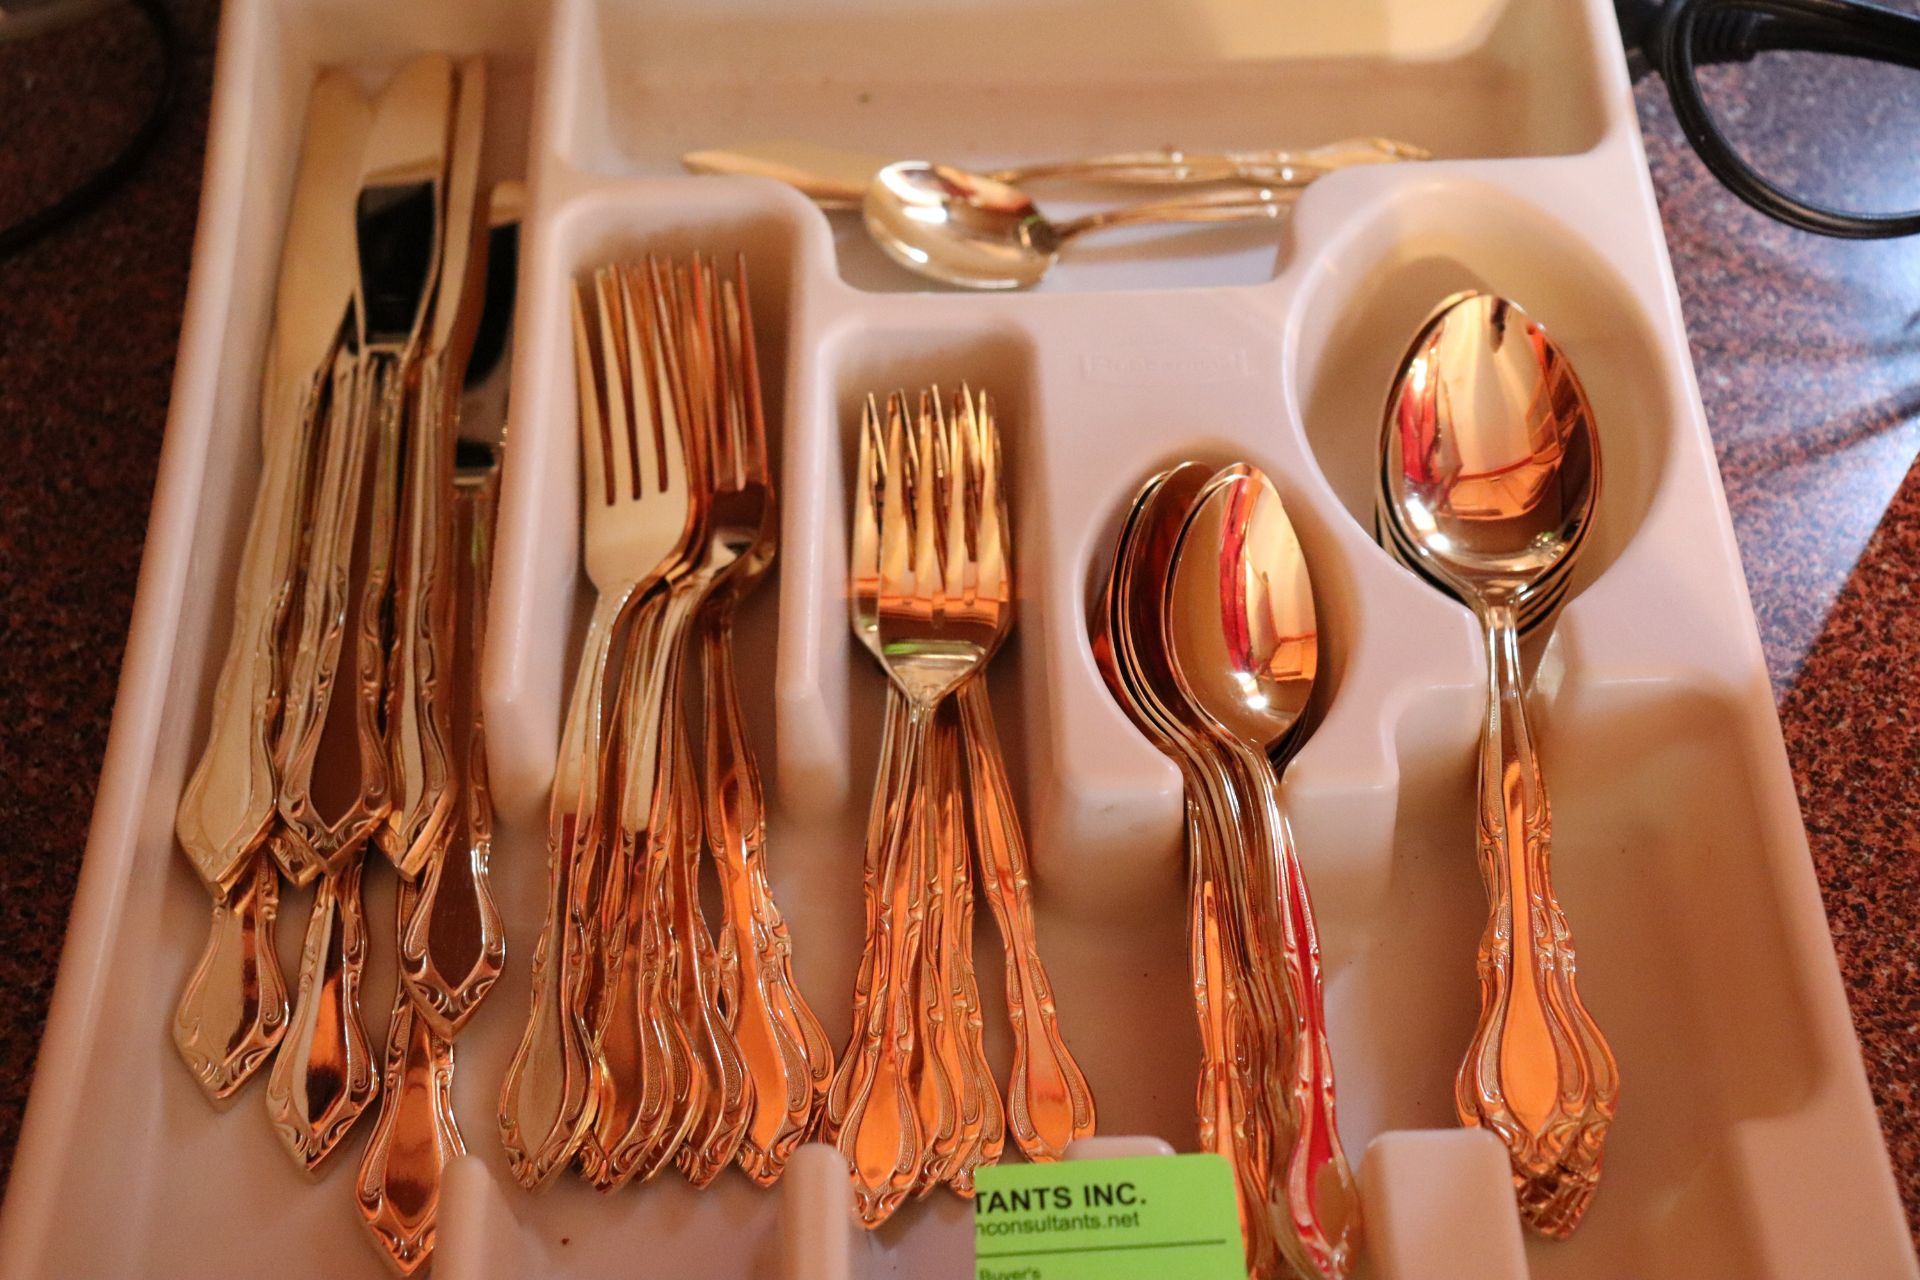 Set of cutlery